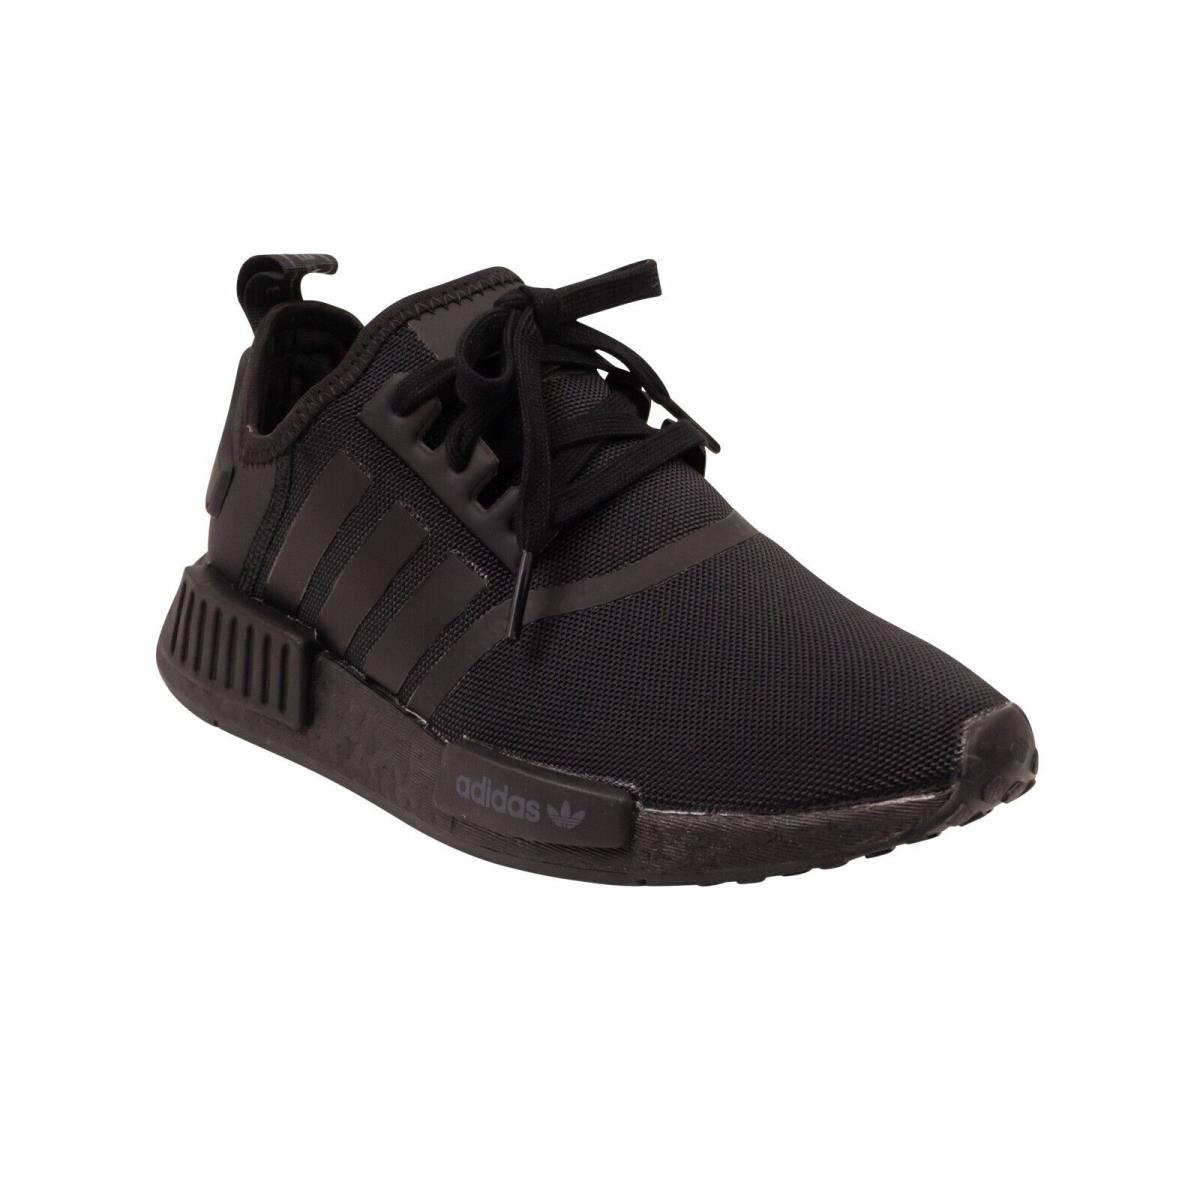 Adidas Black Primeblue NMD_R1 J Sneakers Size 5 - Black